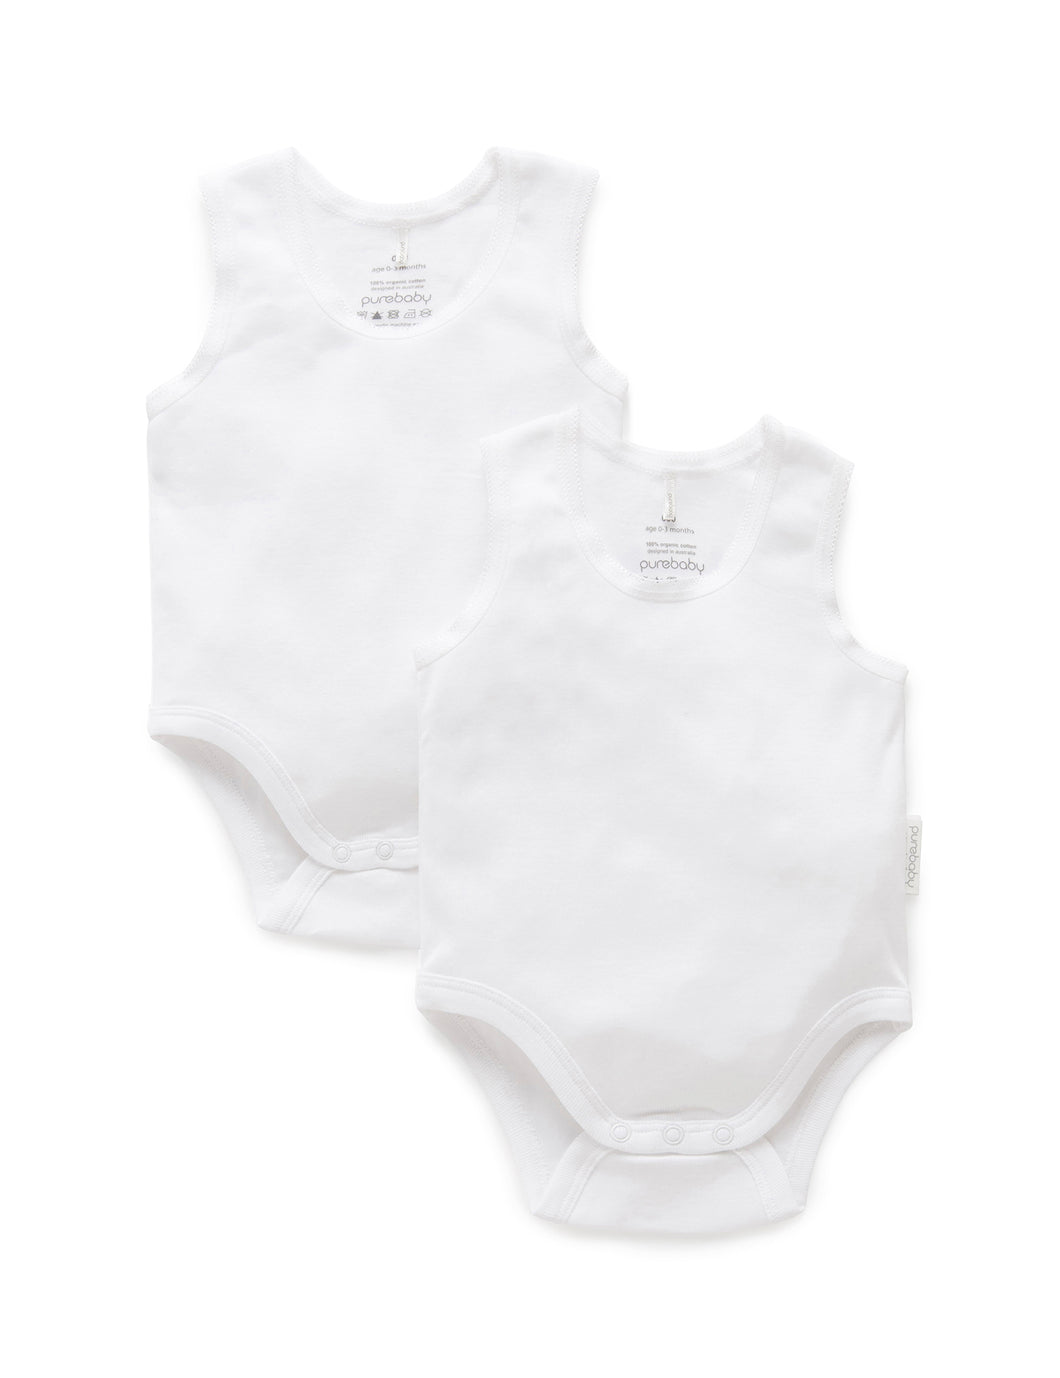 Pure Baby Rib Bodysuit 2 Pack Premature Baby Clothing